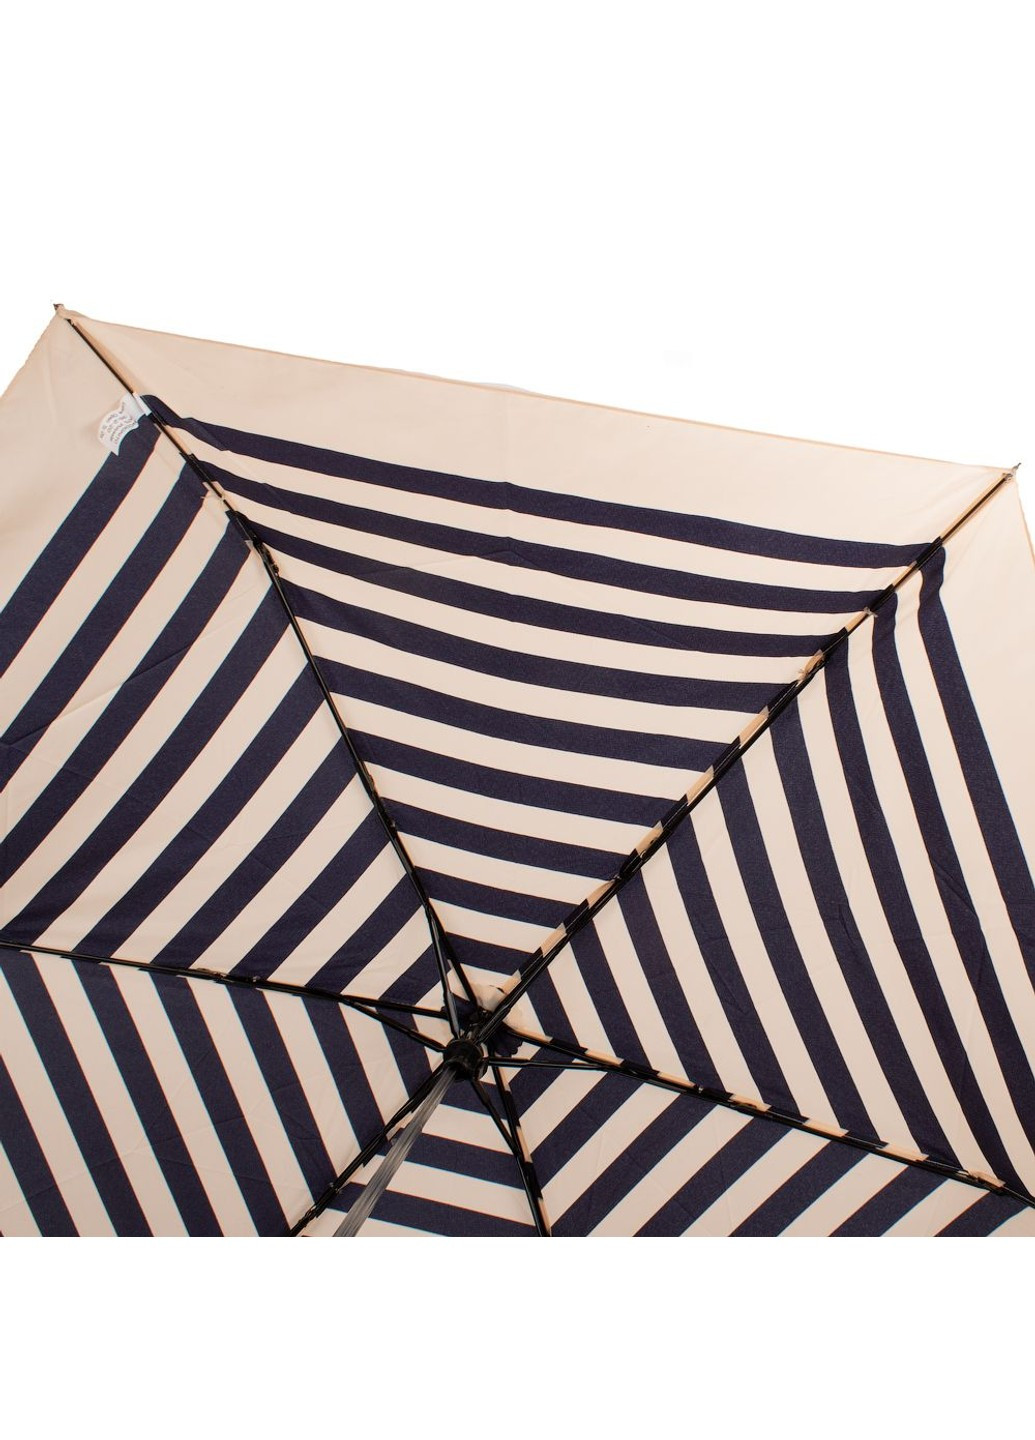 Зонт женский механический FULL923-Nautical-Stripe Incognito (263279530)